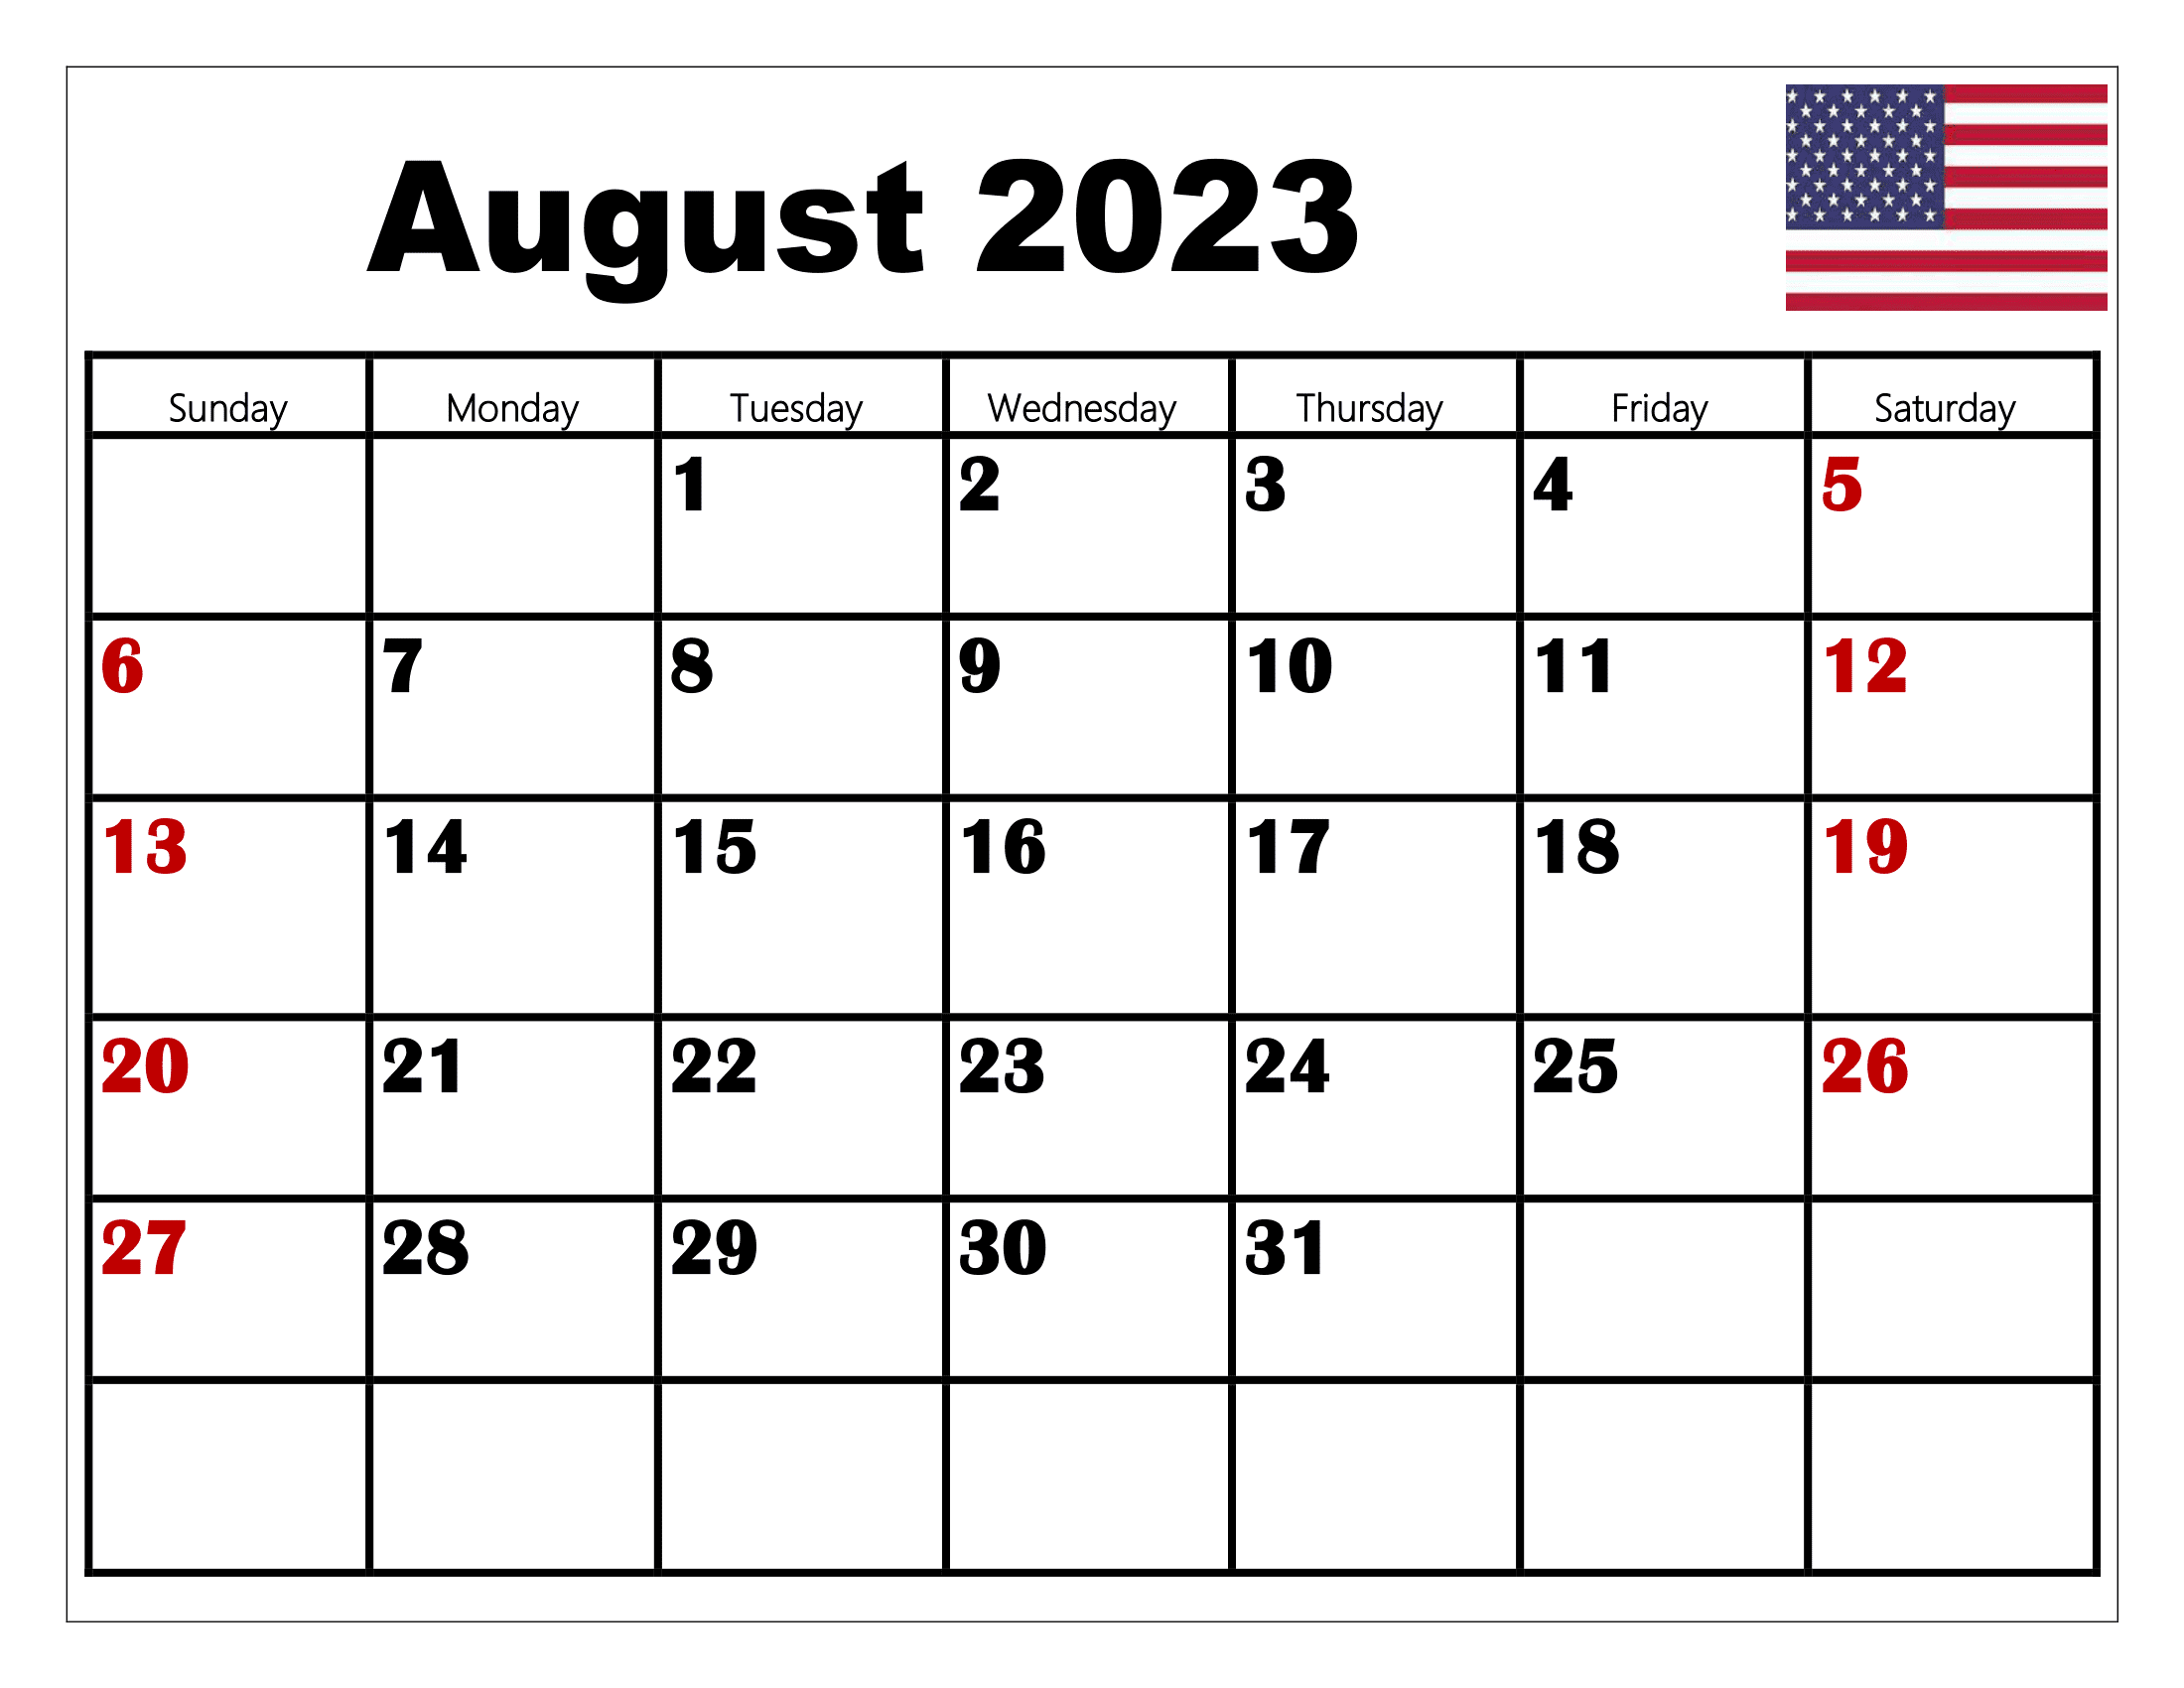 August 2023 Calendar with USA Holidays